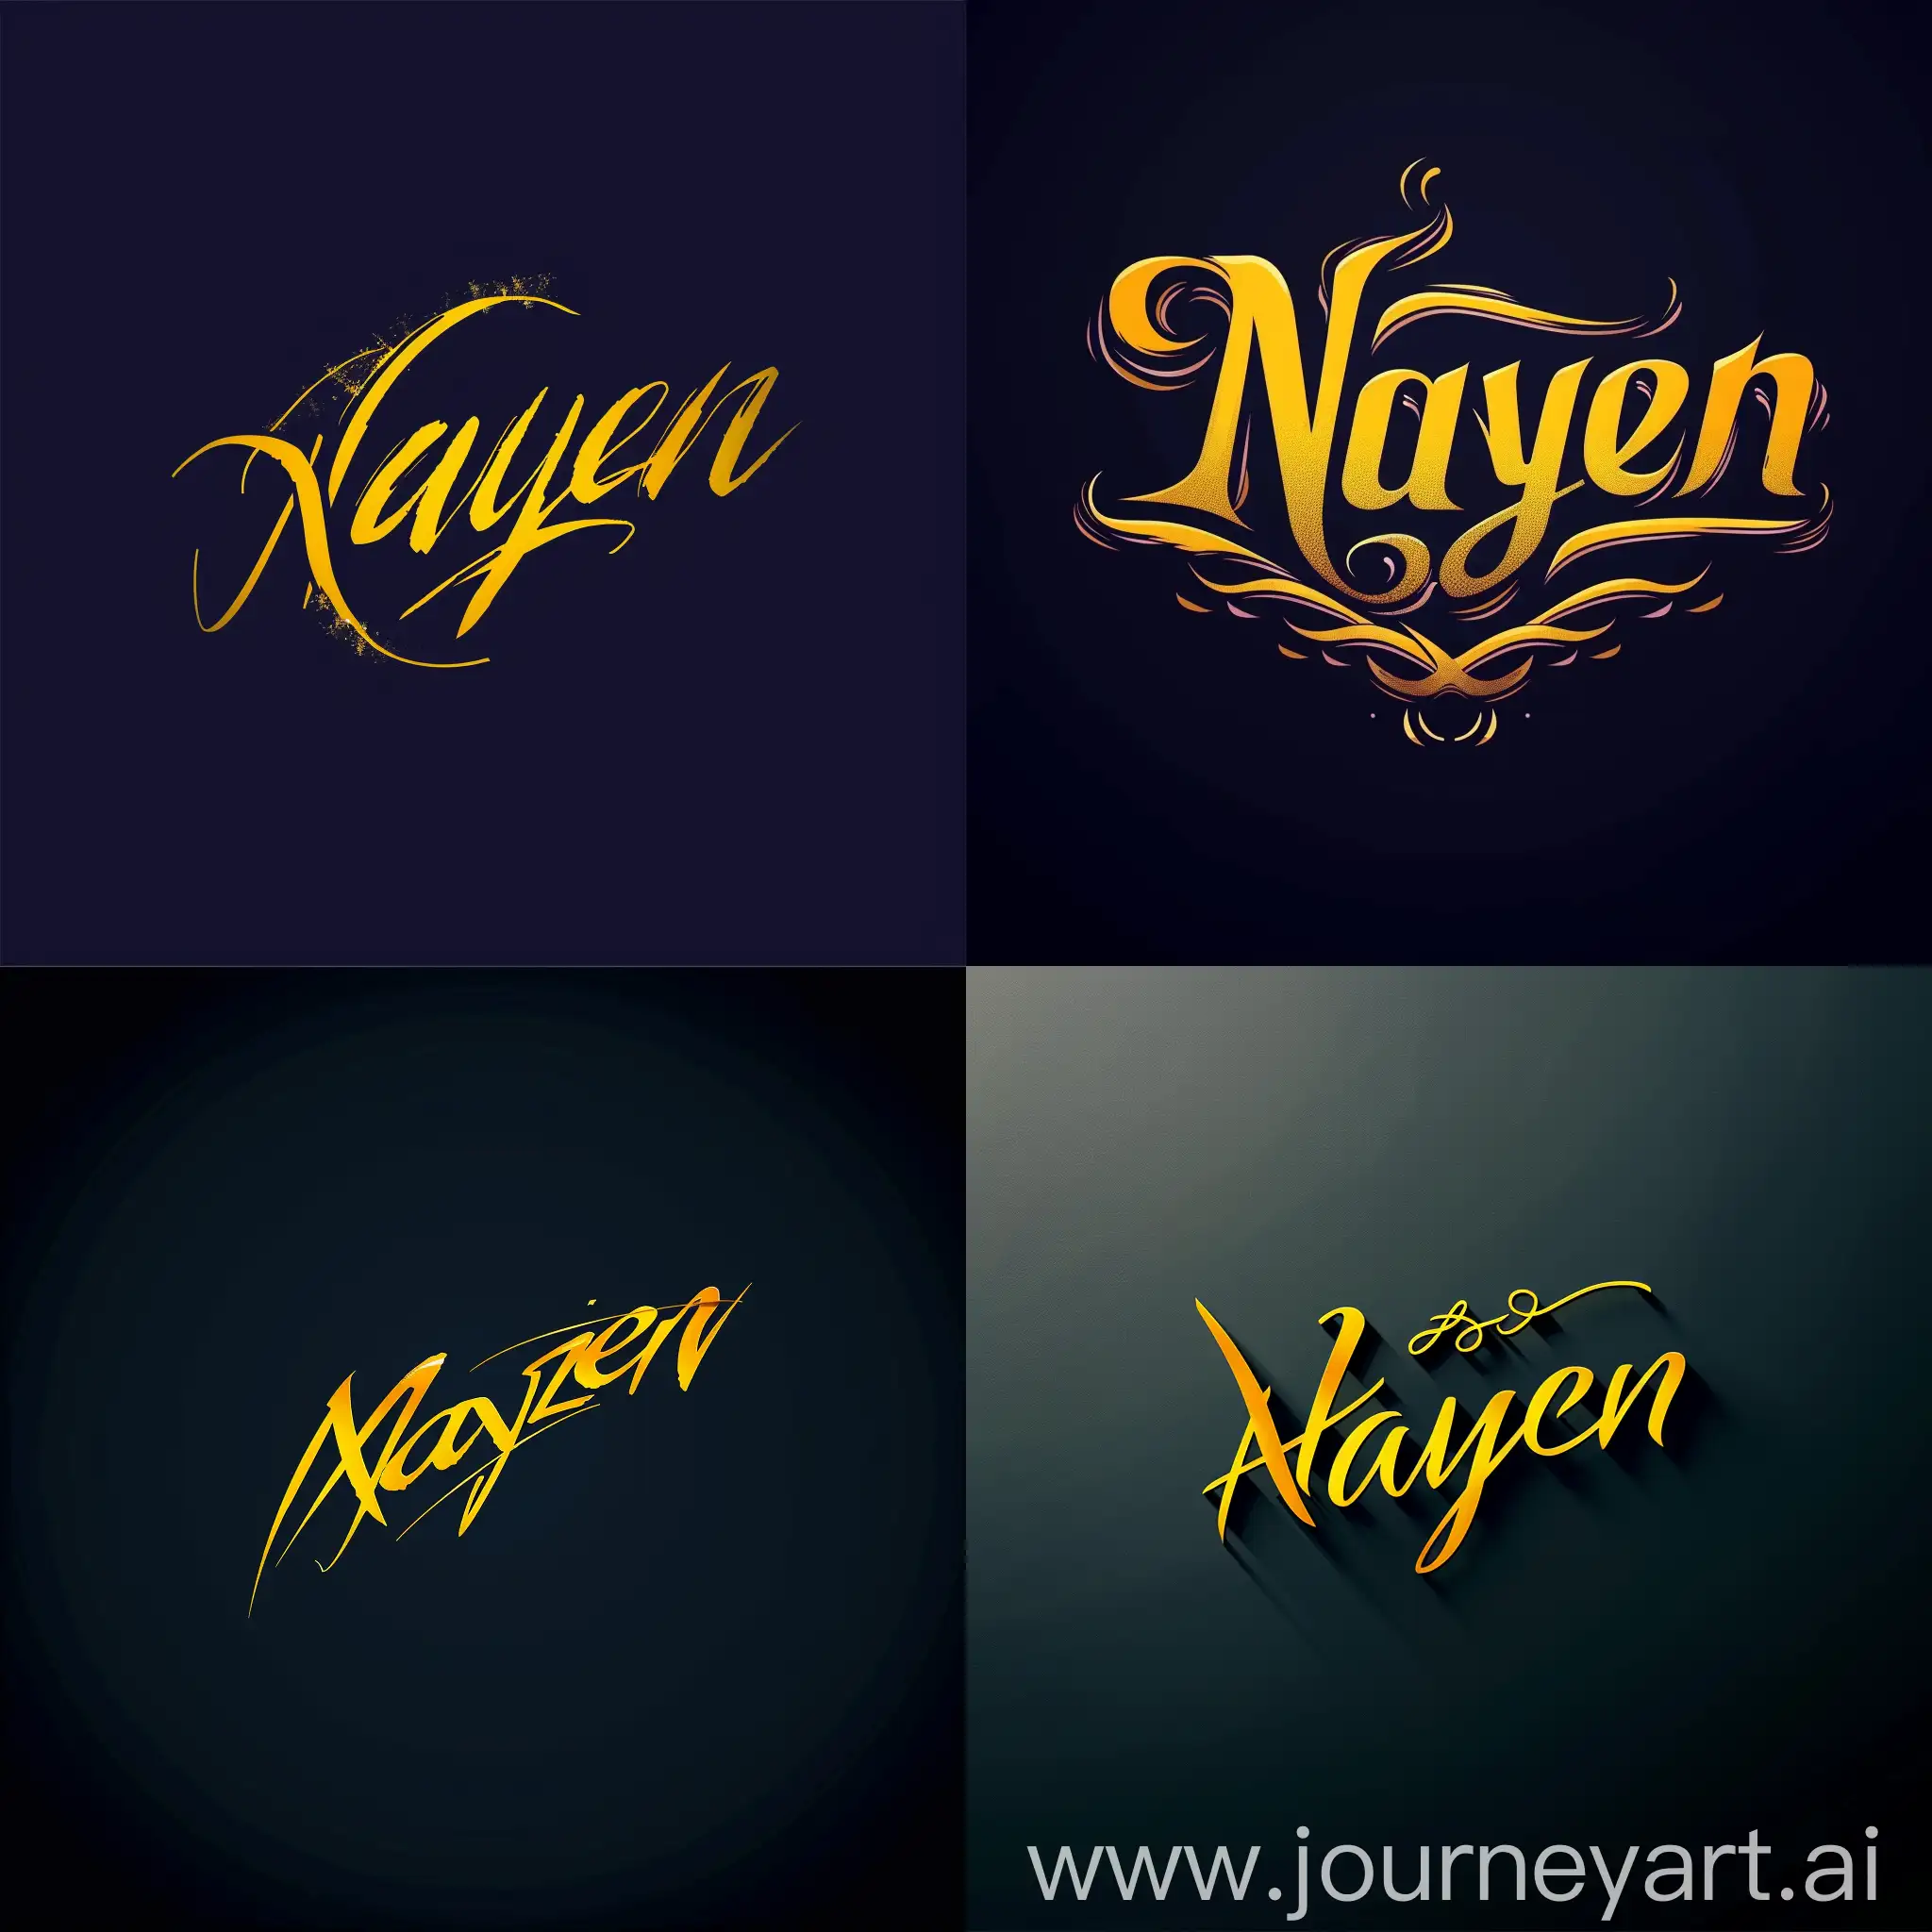 Nayden-Name-Logo-in-Vibrant-Yellow-on-Dark-Background